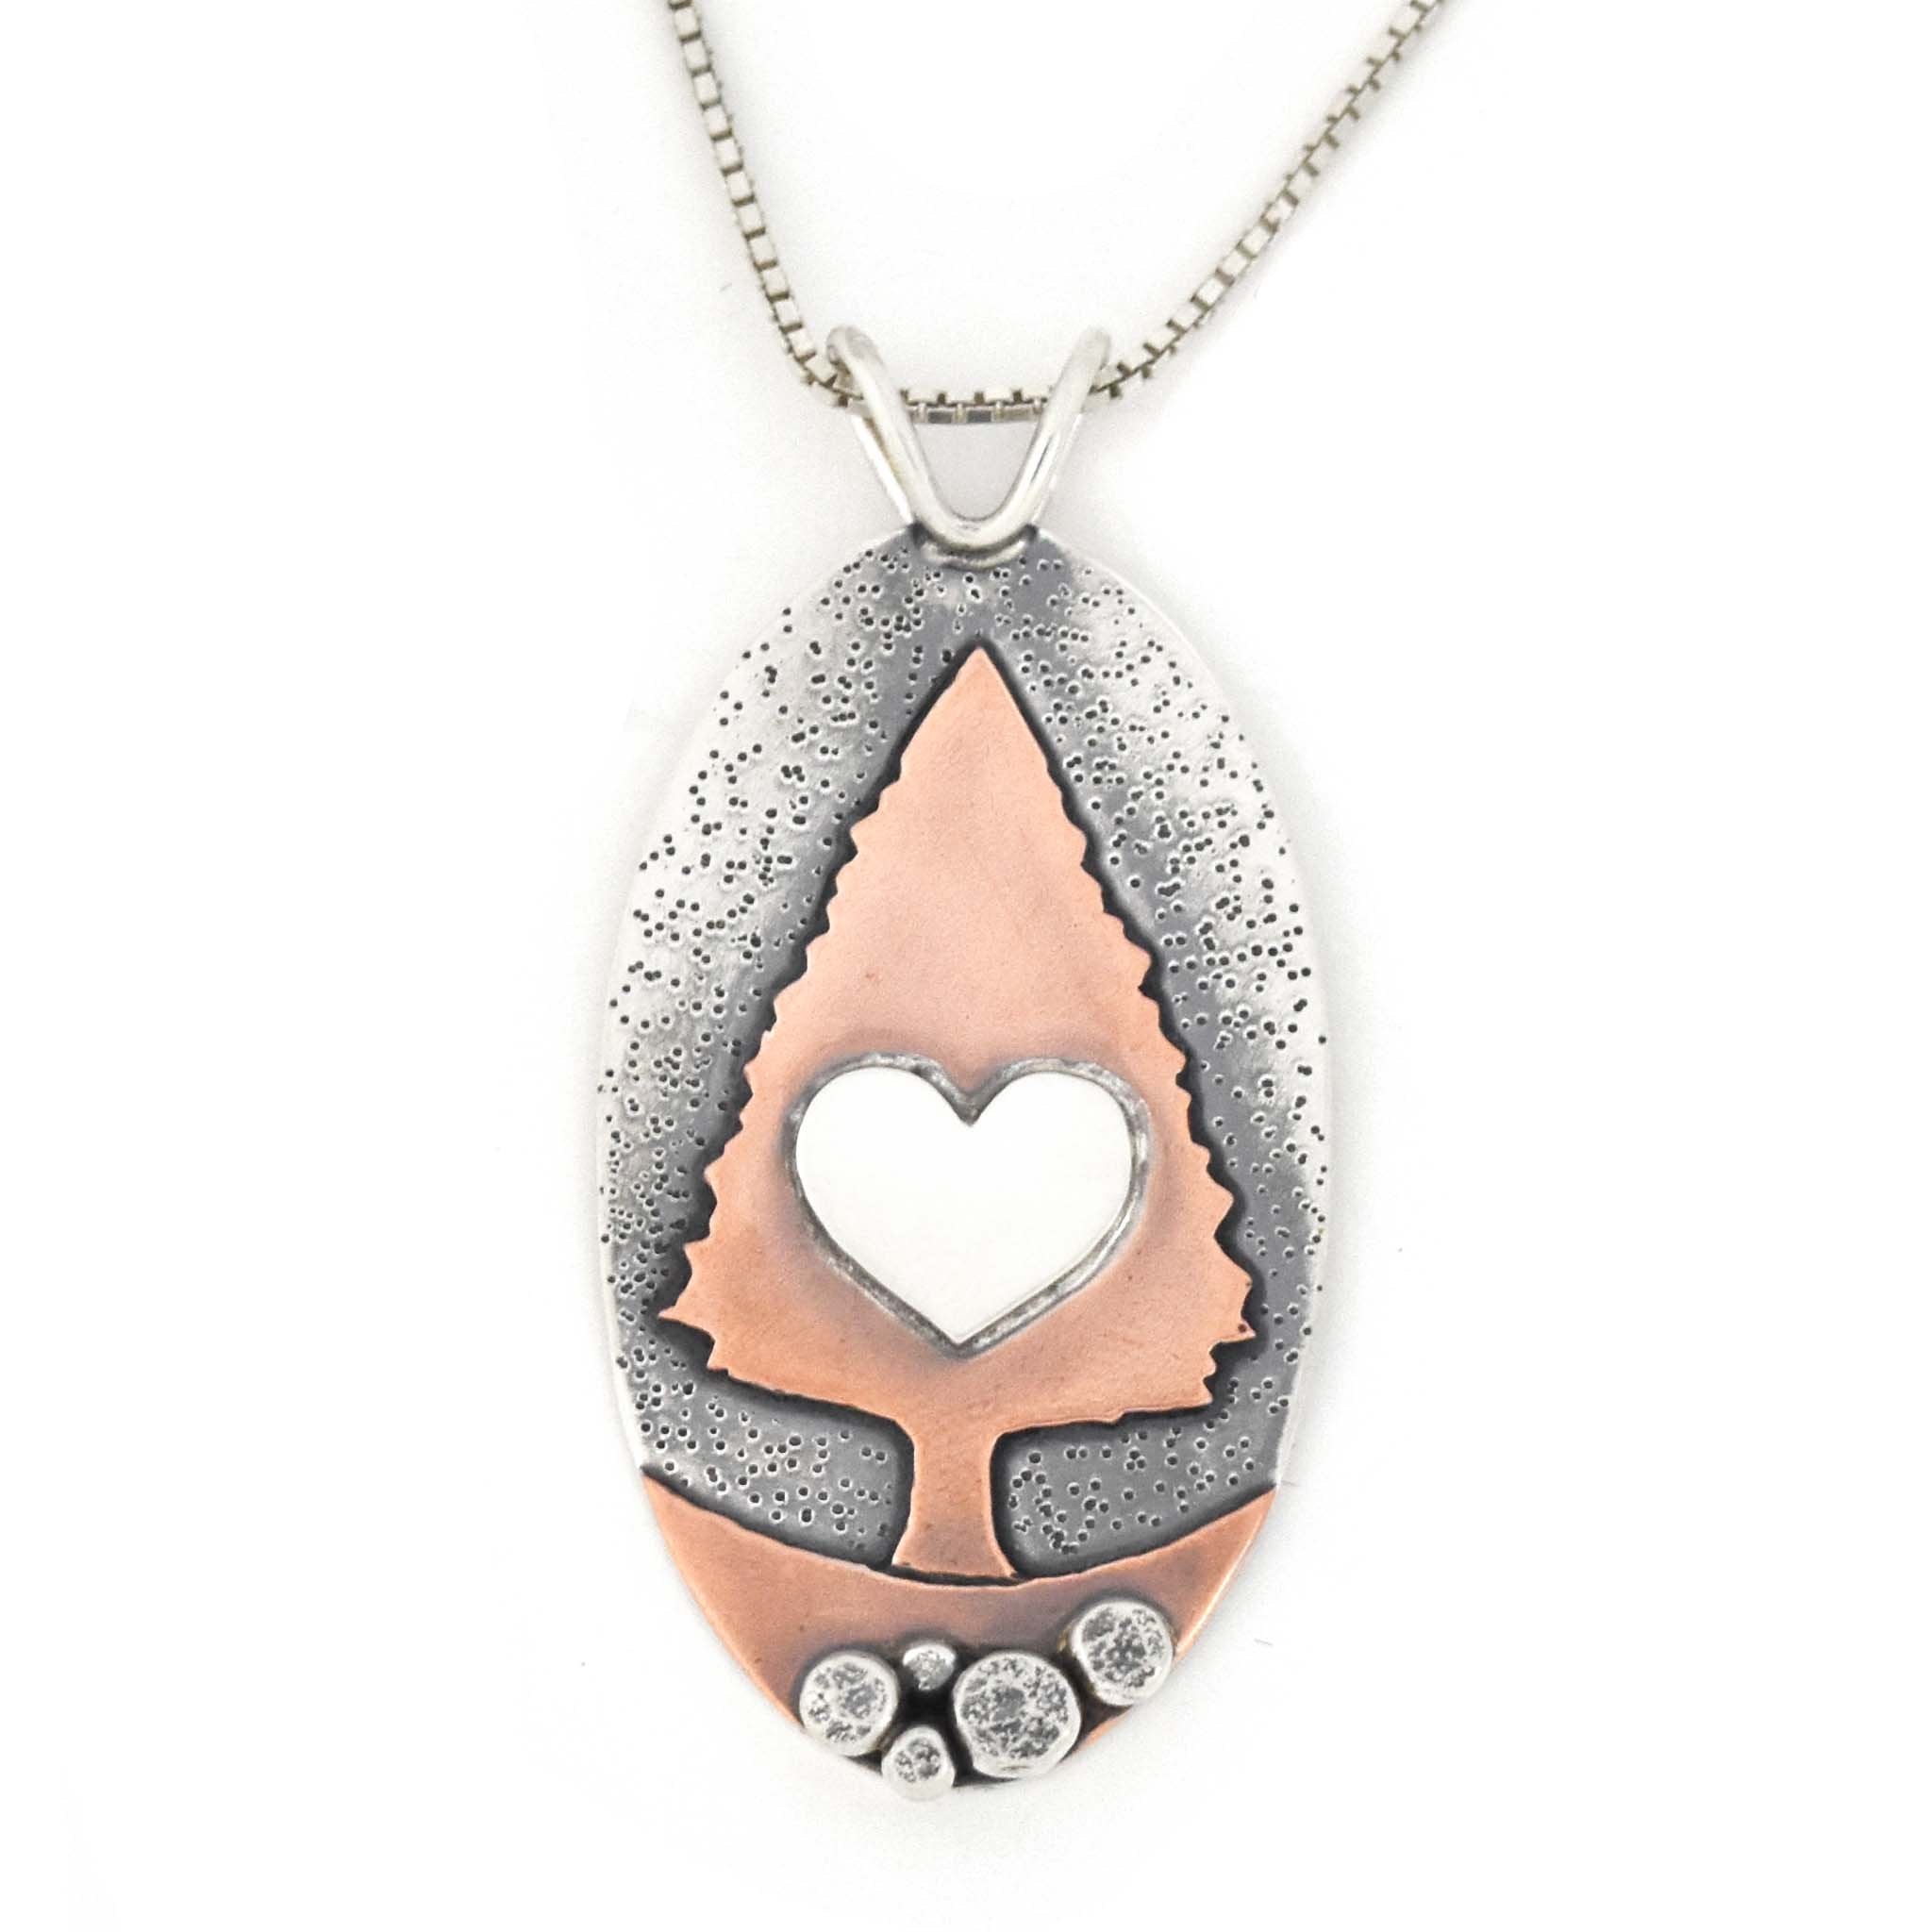 Heartwood Pendant - with optional diamonds - Mixed Metal Pendant No Diamond 1 Diamonds 5683 - handmade by Beth Millner Jewelry